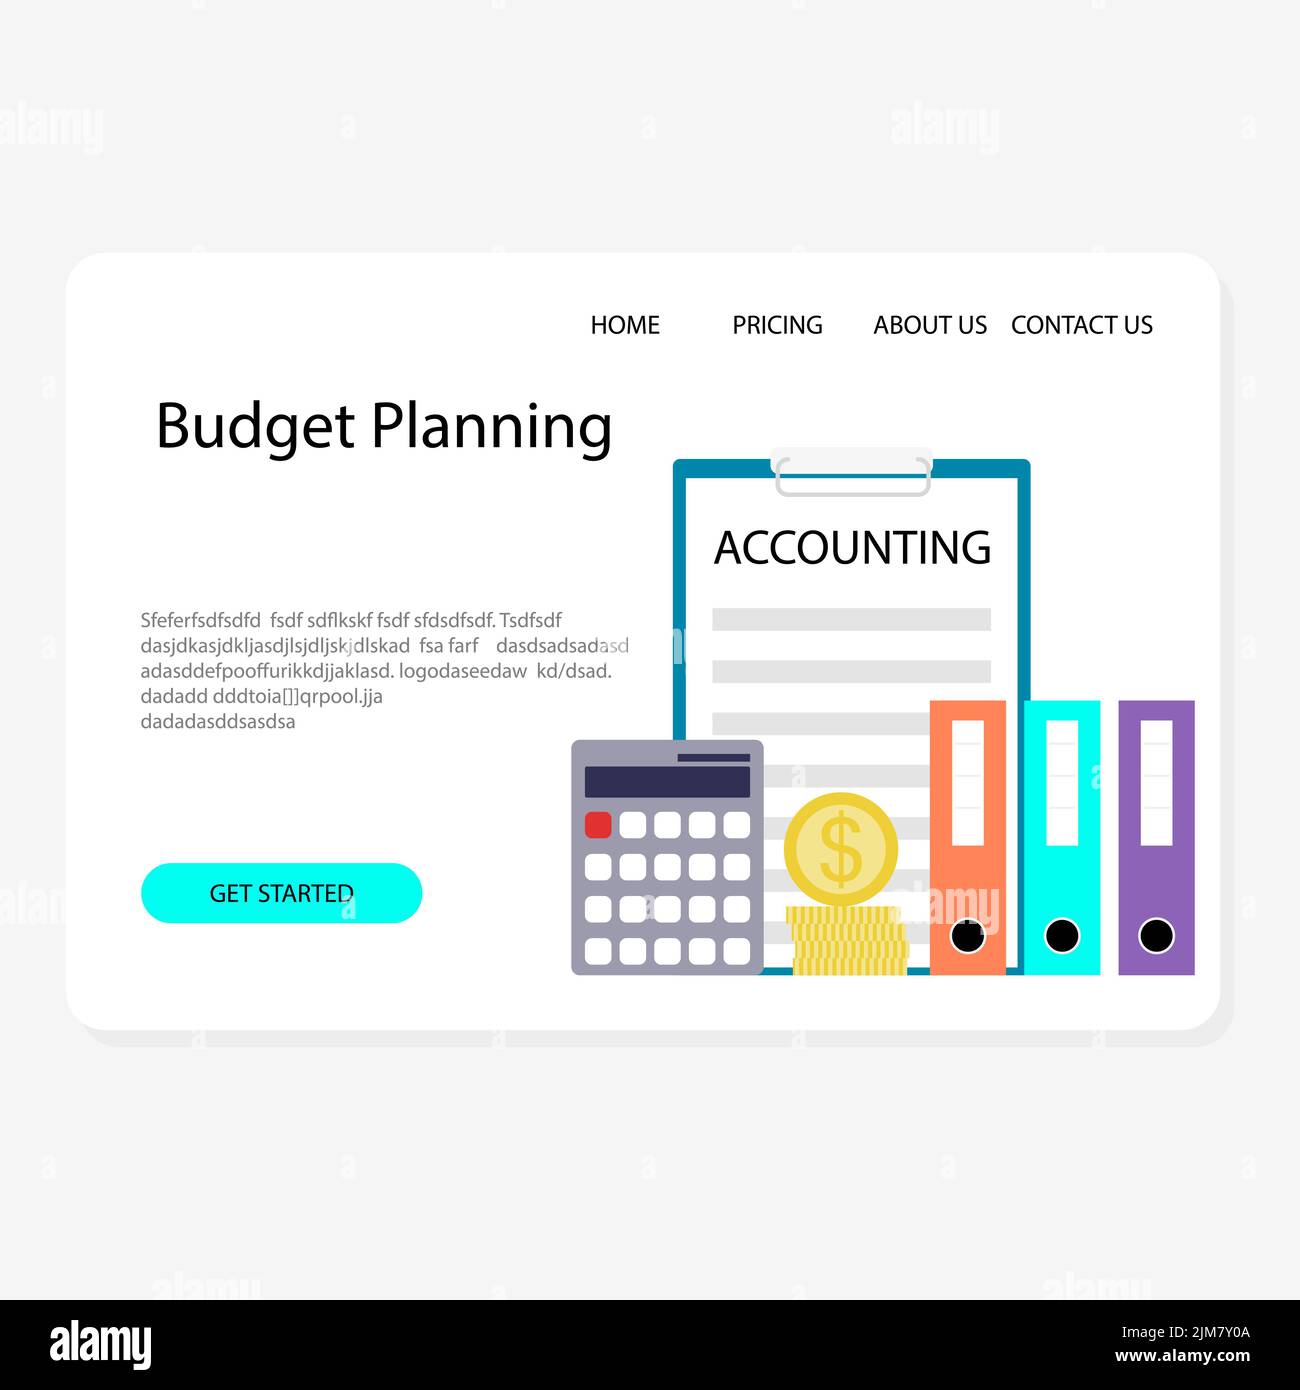 Budget planning service, b2b accounting and financial advice. Vector illustration. B2b marketing, job analytic, supply mamagement, industry marketing, Stock Photo